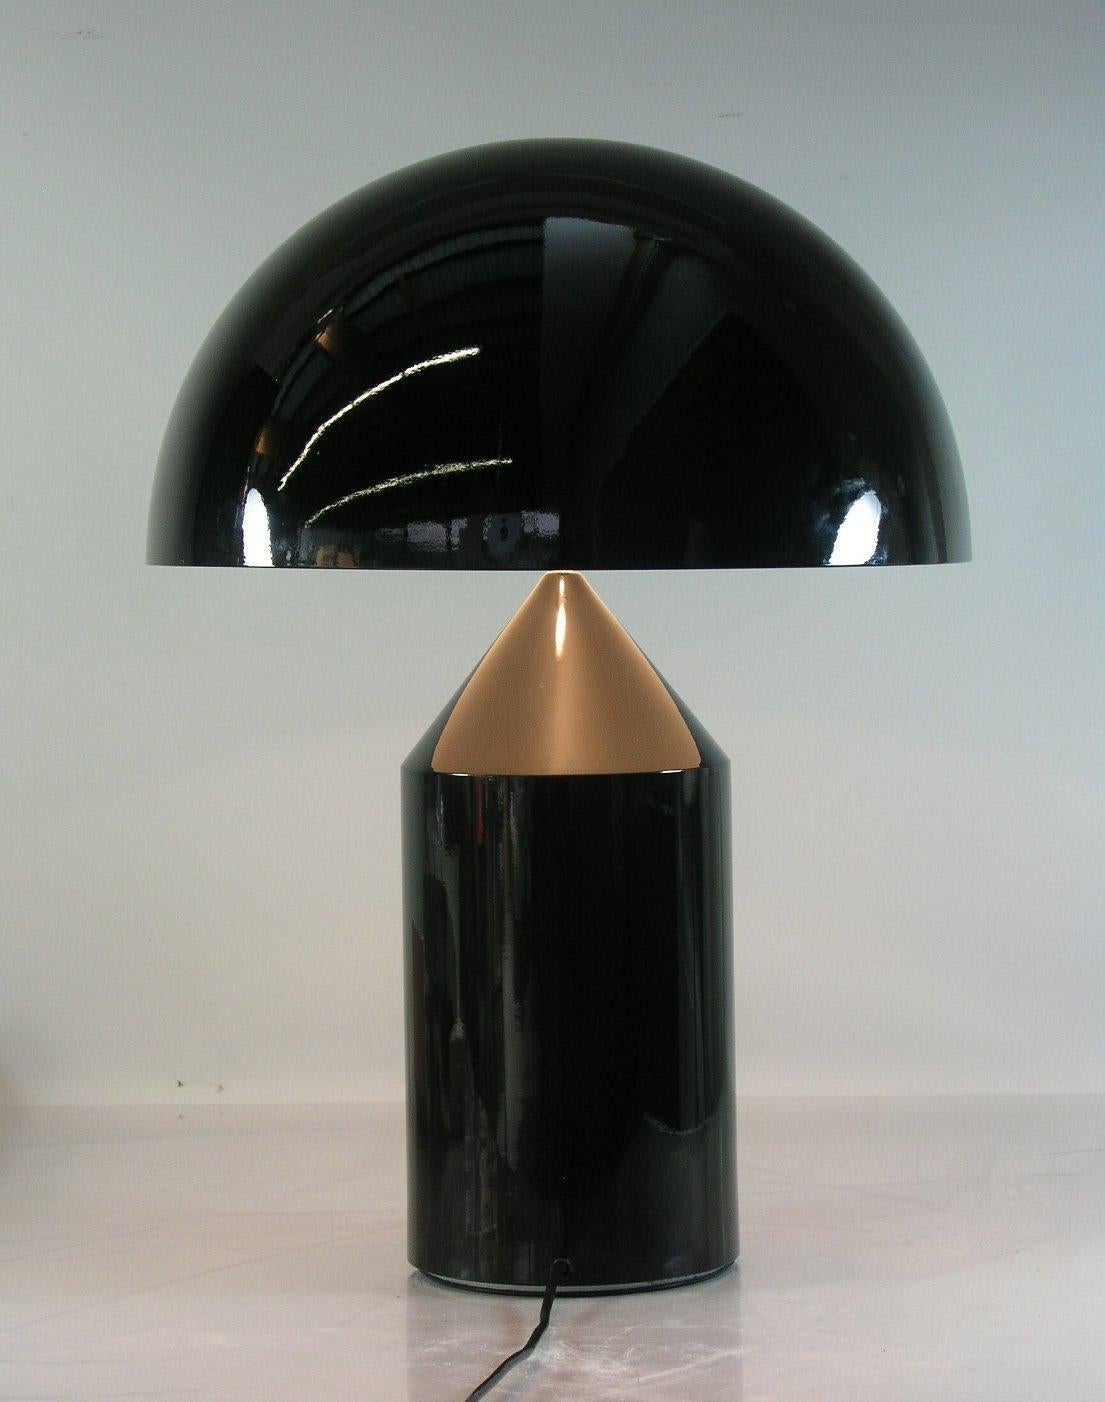 Italian Metal Black/White Table Lamp Atollo 233 by Vico Magistretti for Oluce For Sale